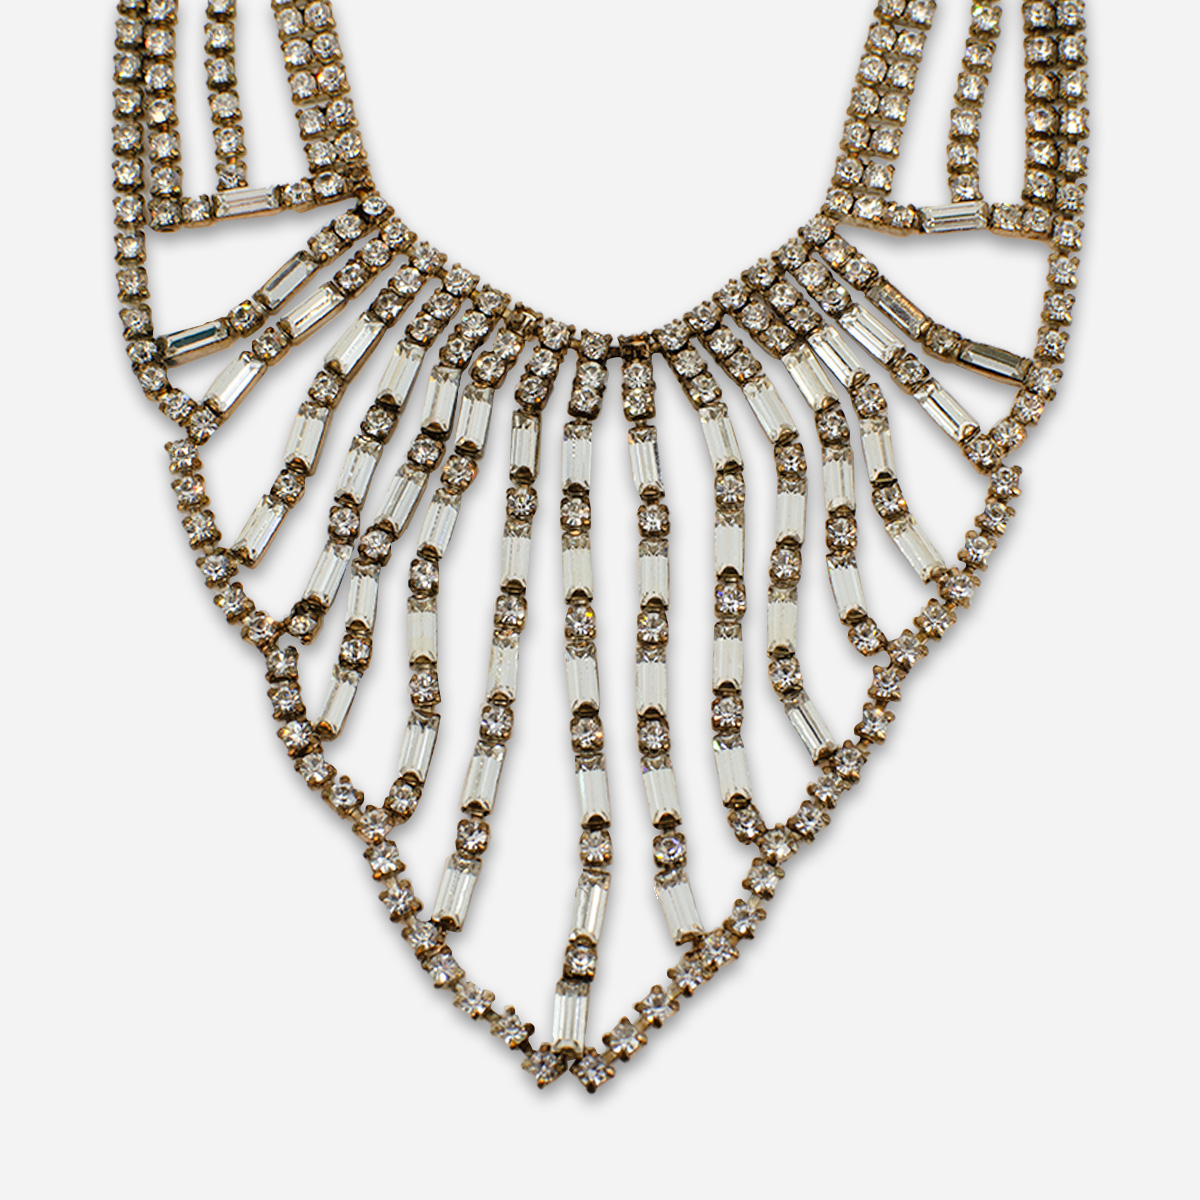 1950s Kramer bib necklace